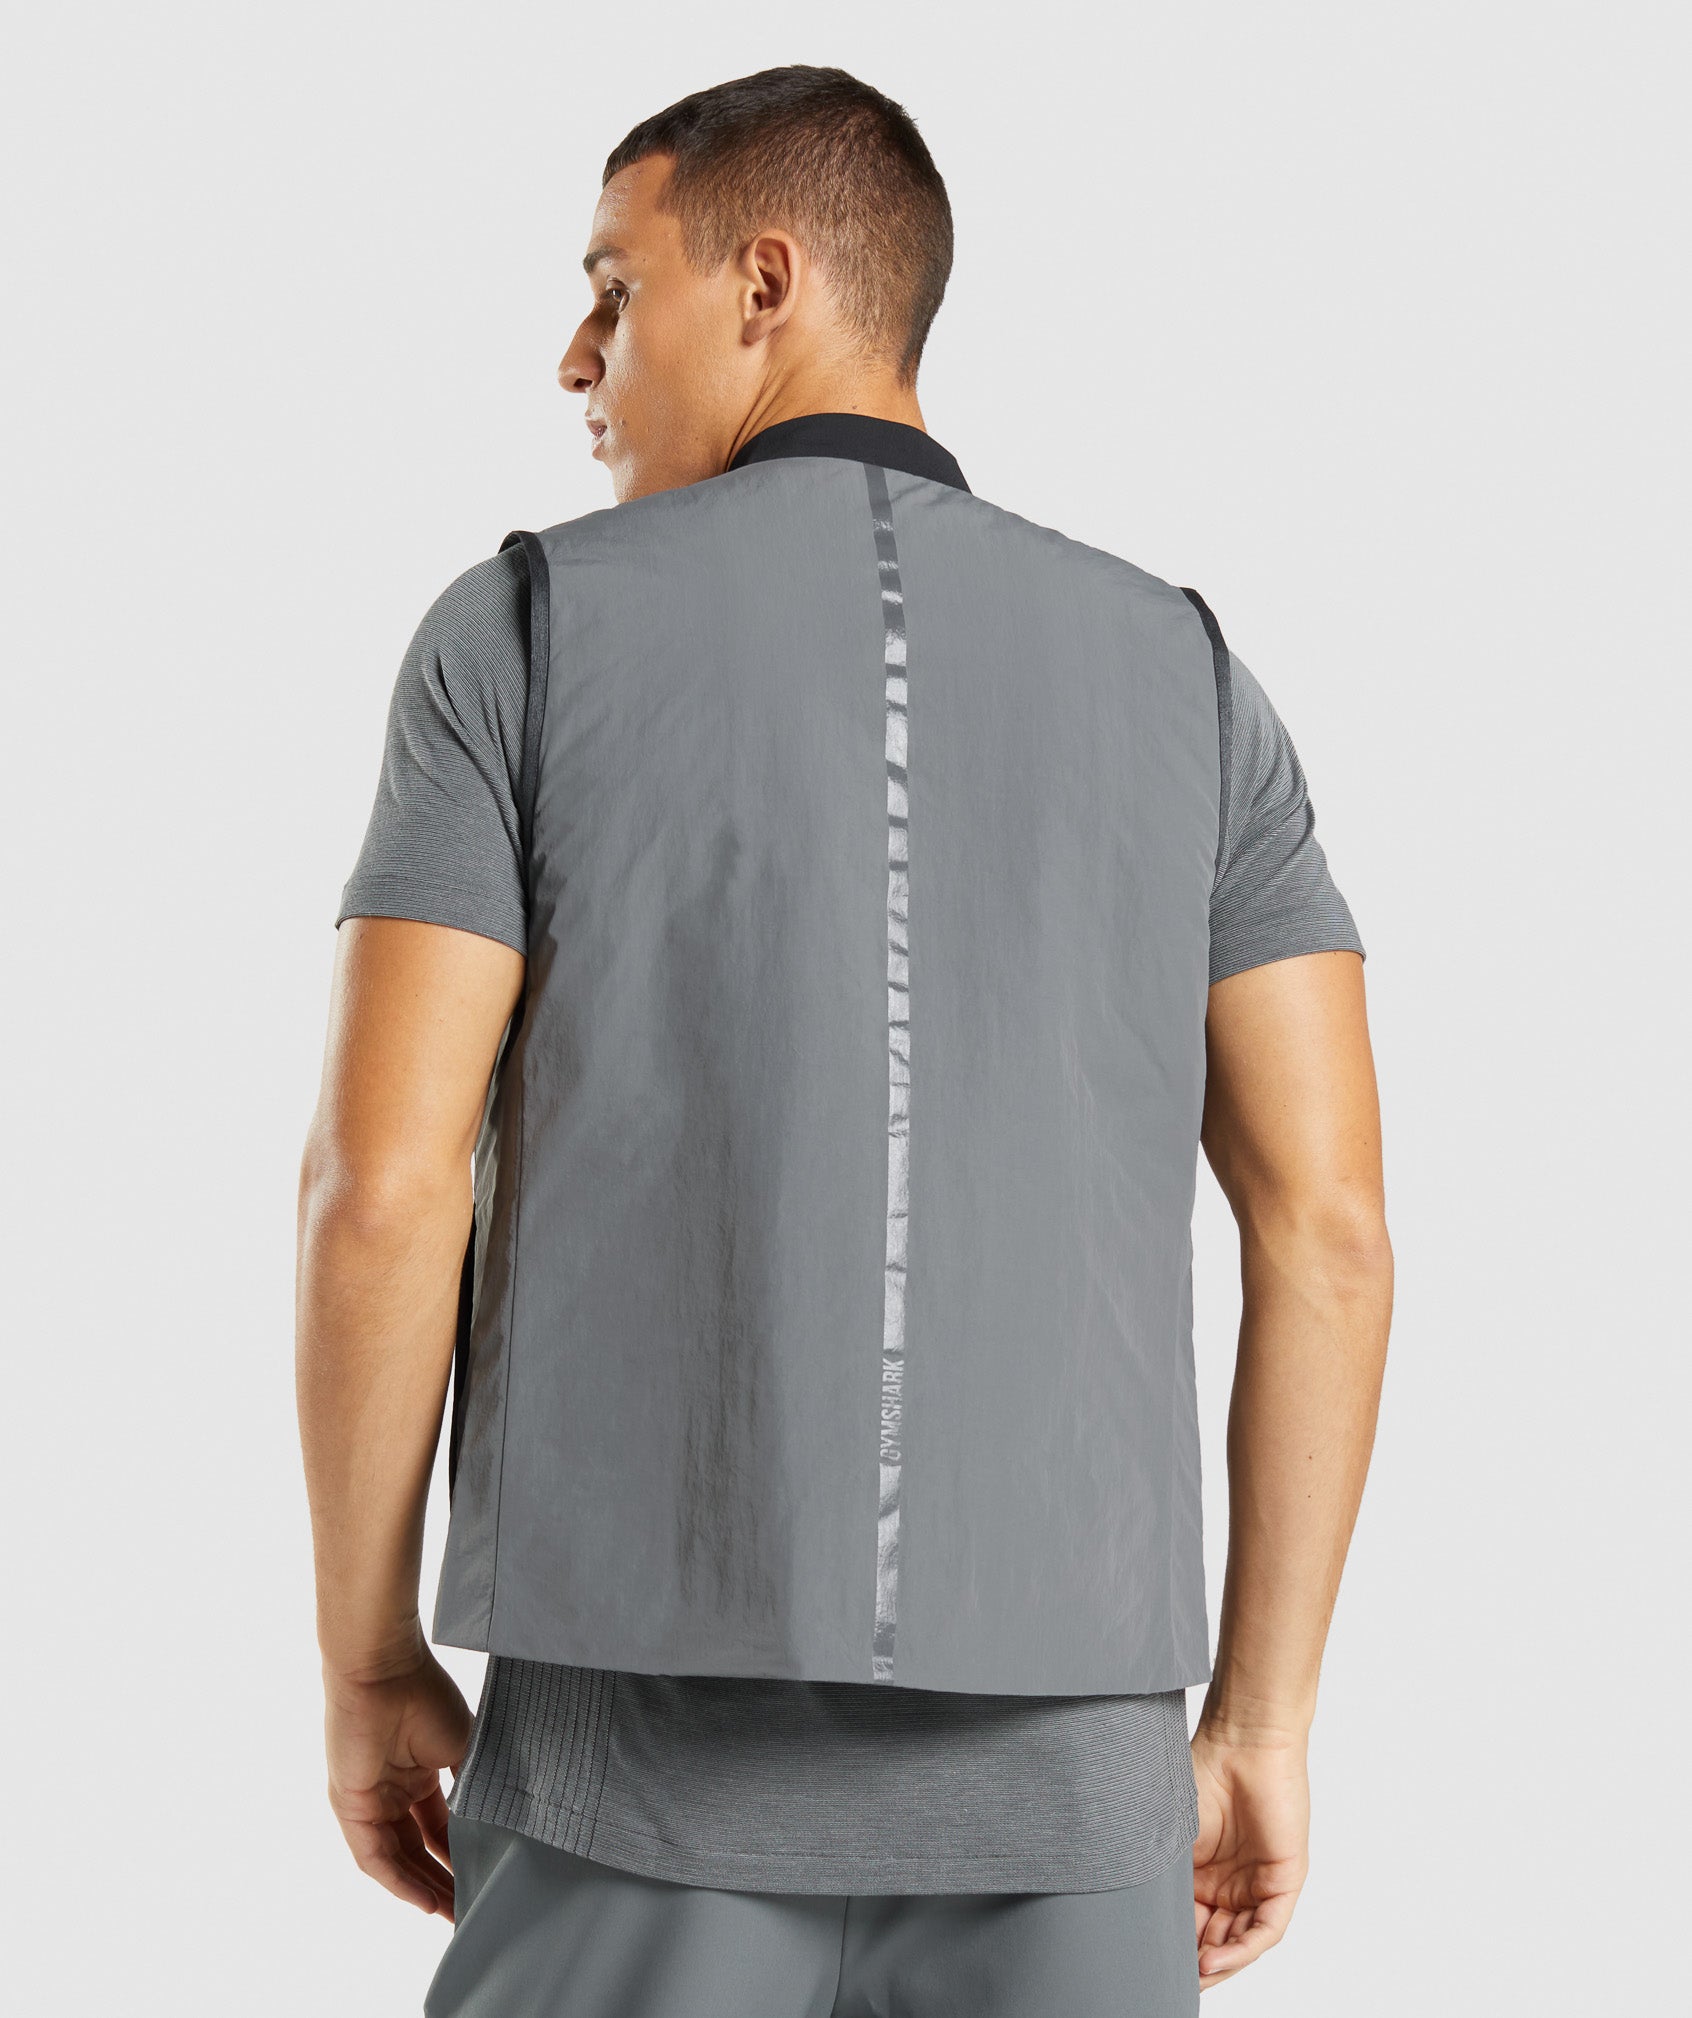 Retake Reversible Vest in Charcoal/Black